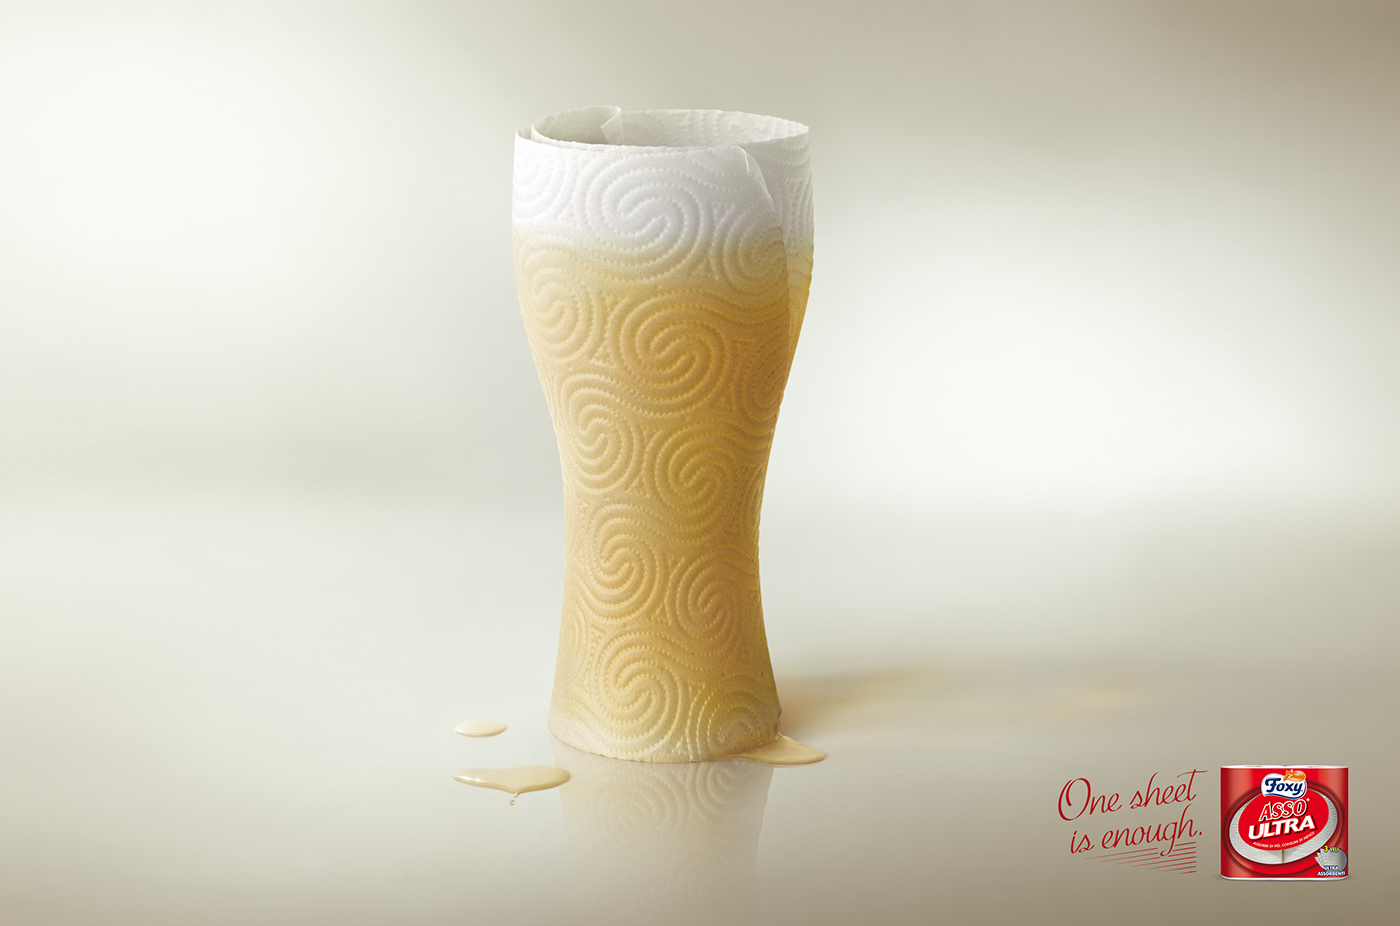 Foxy glass carioca carioca studio beer wine juice 3D CGI paper towel absorbent ferdinando galletti davide pasquale Cannes